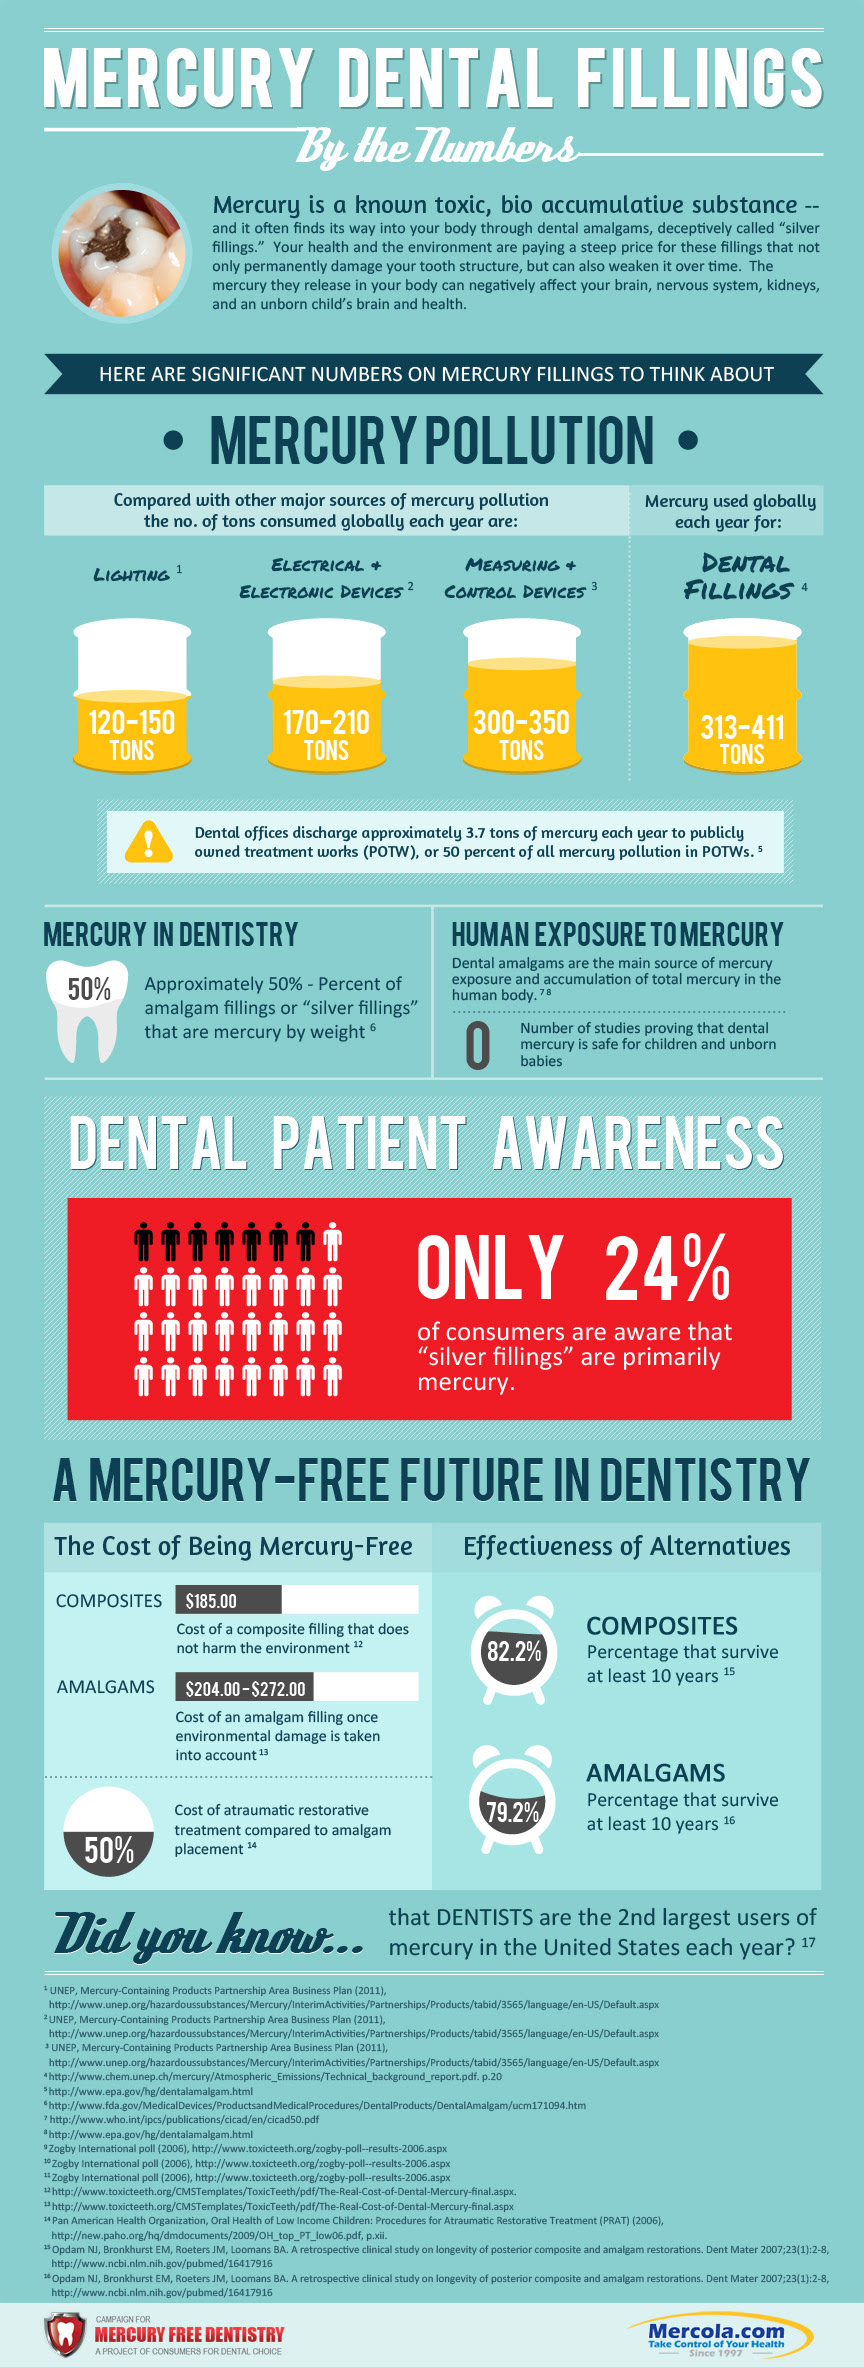 Mercury Dental Fillings